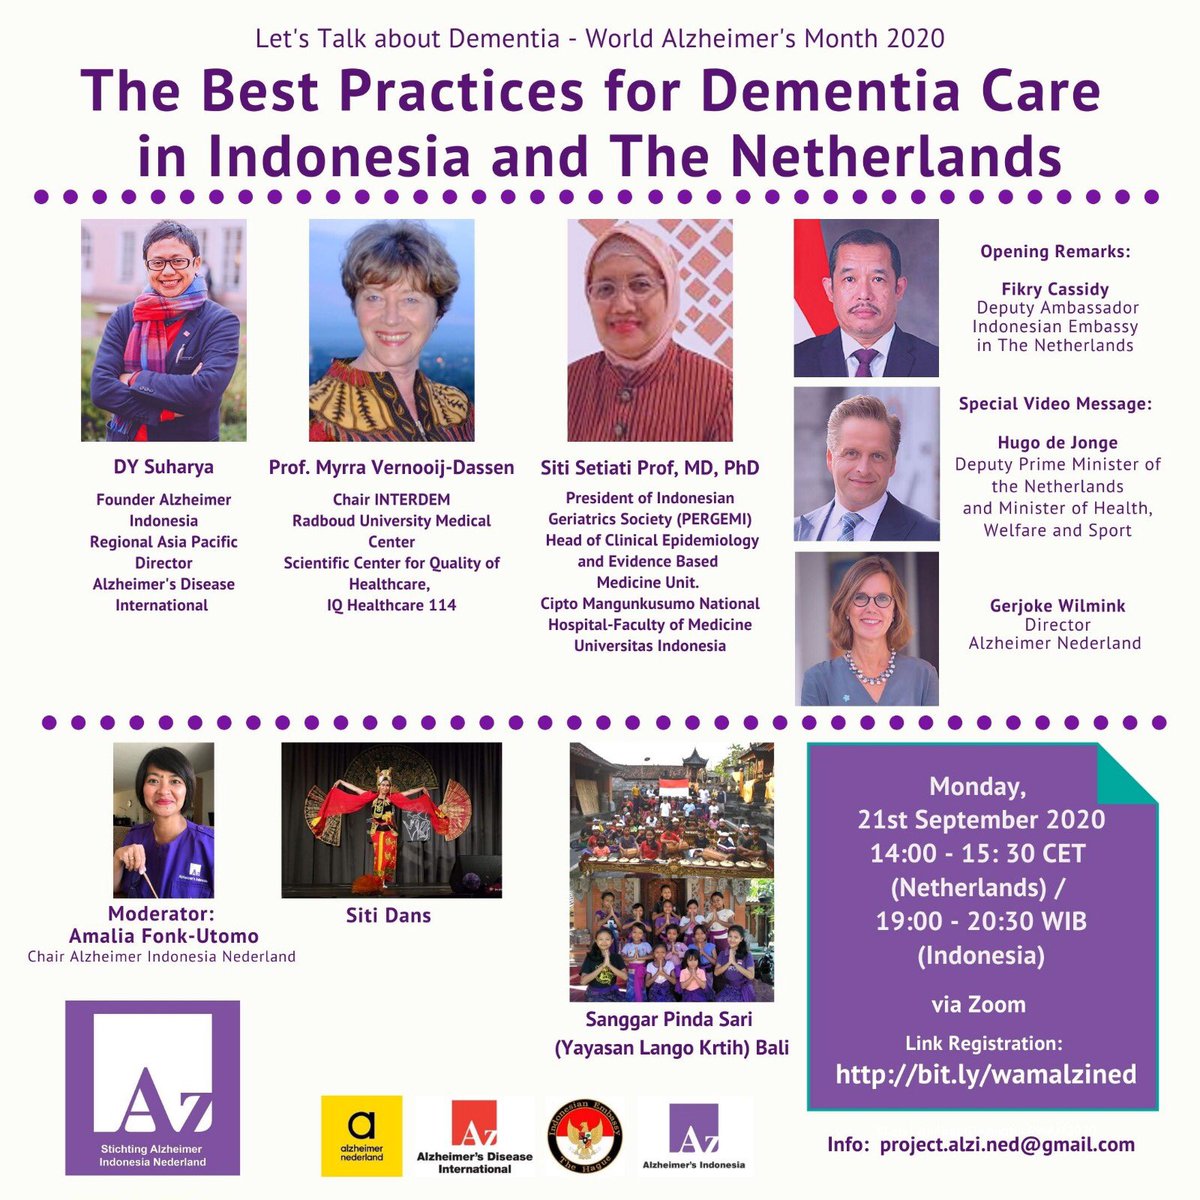 'The Best Practices for Dementia Care in Indonesia and The Netherlands' 
Monday, 21st September 
19:00 - 20:30 WIB
14:00 - 15: 30 CET 
Register here: bit.ly/wamalzined

#letstalkaboutdementia #wam #wam2020 #worldalzheimermonth #wereldalzheimerdag